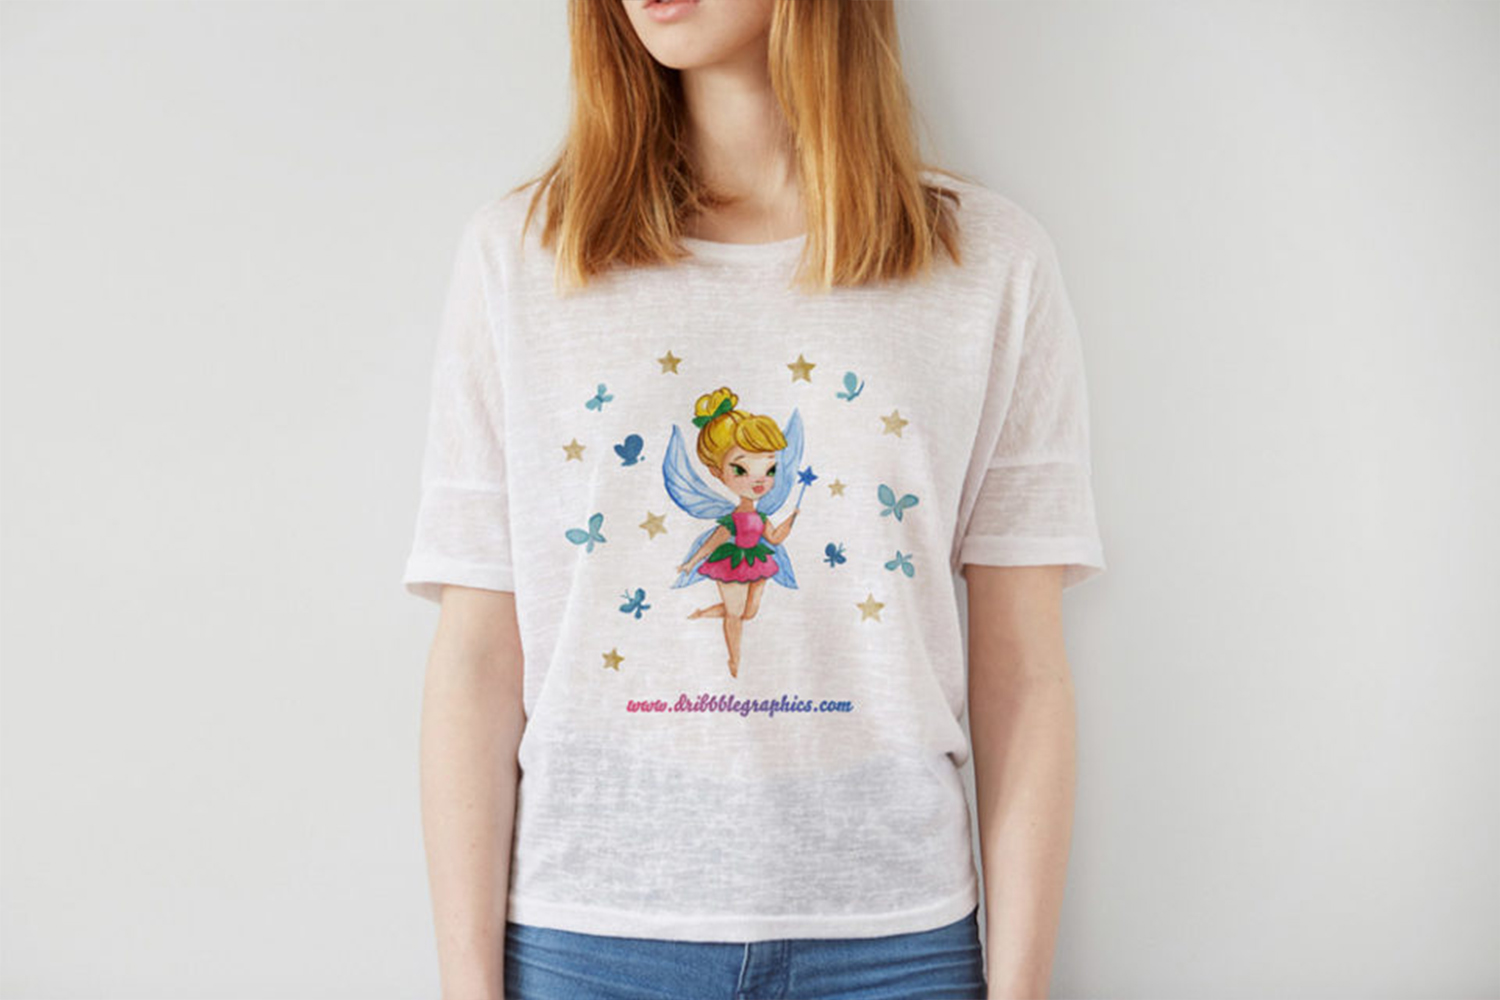 Pretty Girl T-Shirt Mockup Free Download 